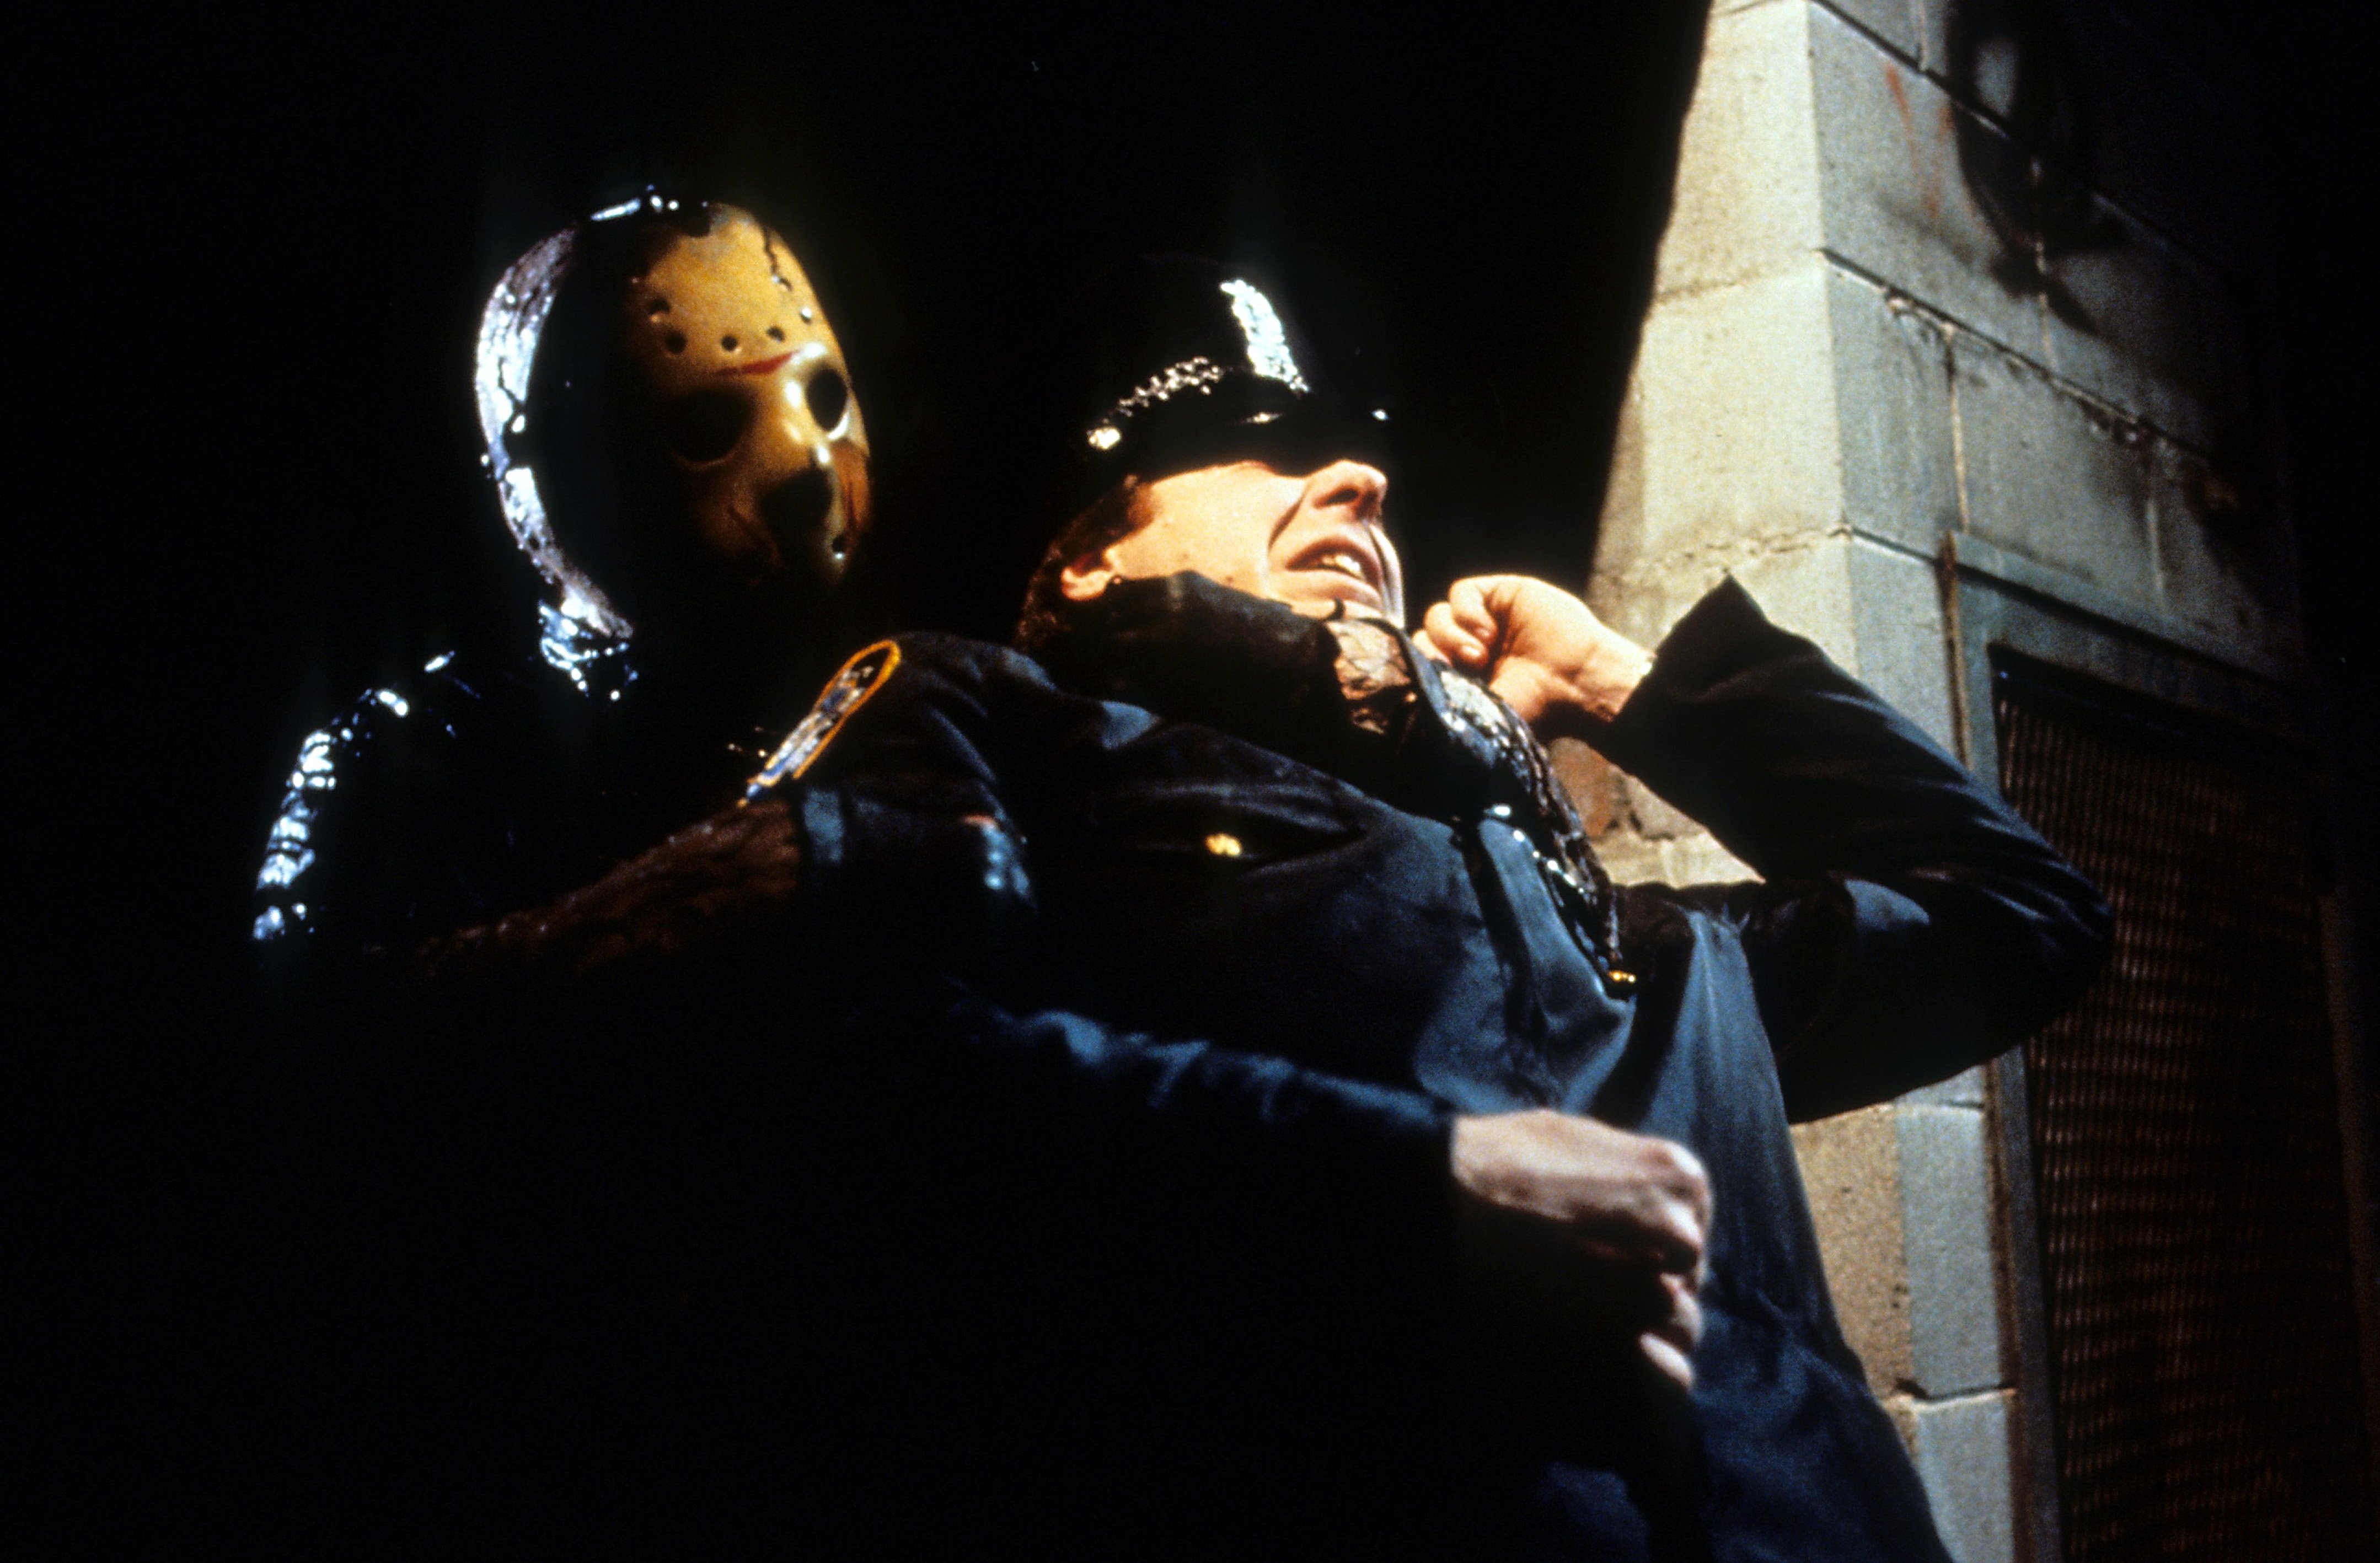 Jason Vorhees attacking a cop in Friday the 13th Part VIII: Jason Takes Manhattan